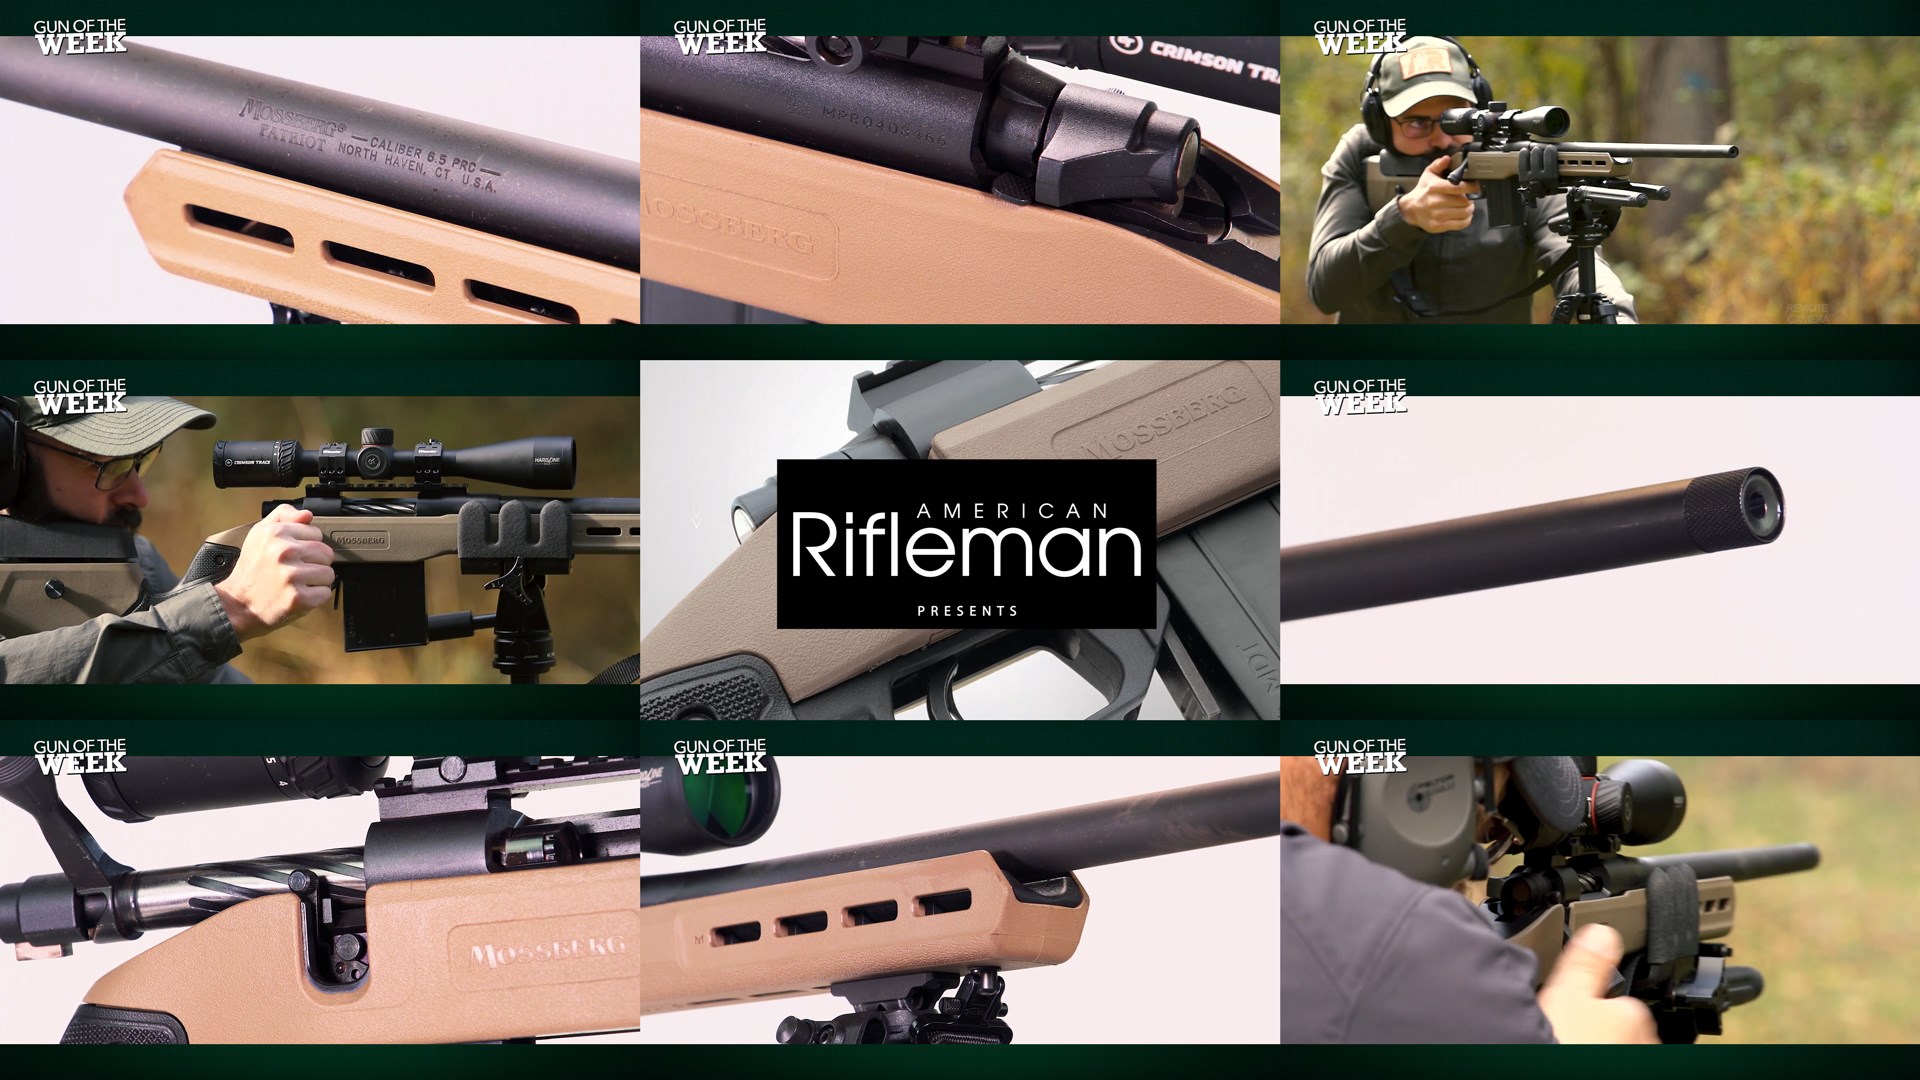 9 image arrangement mosaic tiles Mossberg Patriot LR Tactical bolt-action rifle in use shooting men detail close-up gun parts AMERICAN RIFLEMAN text on image